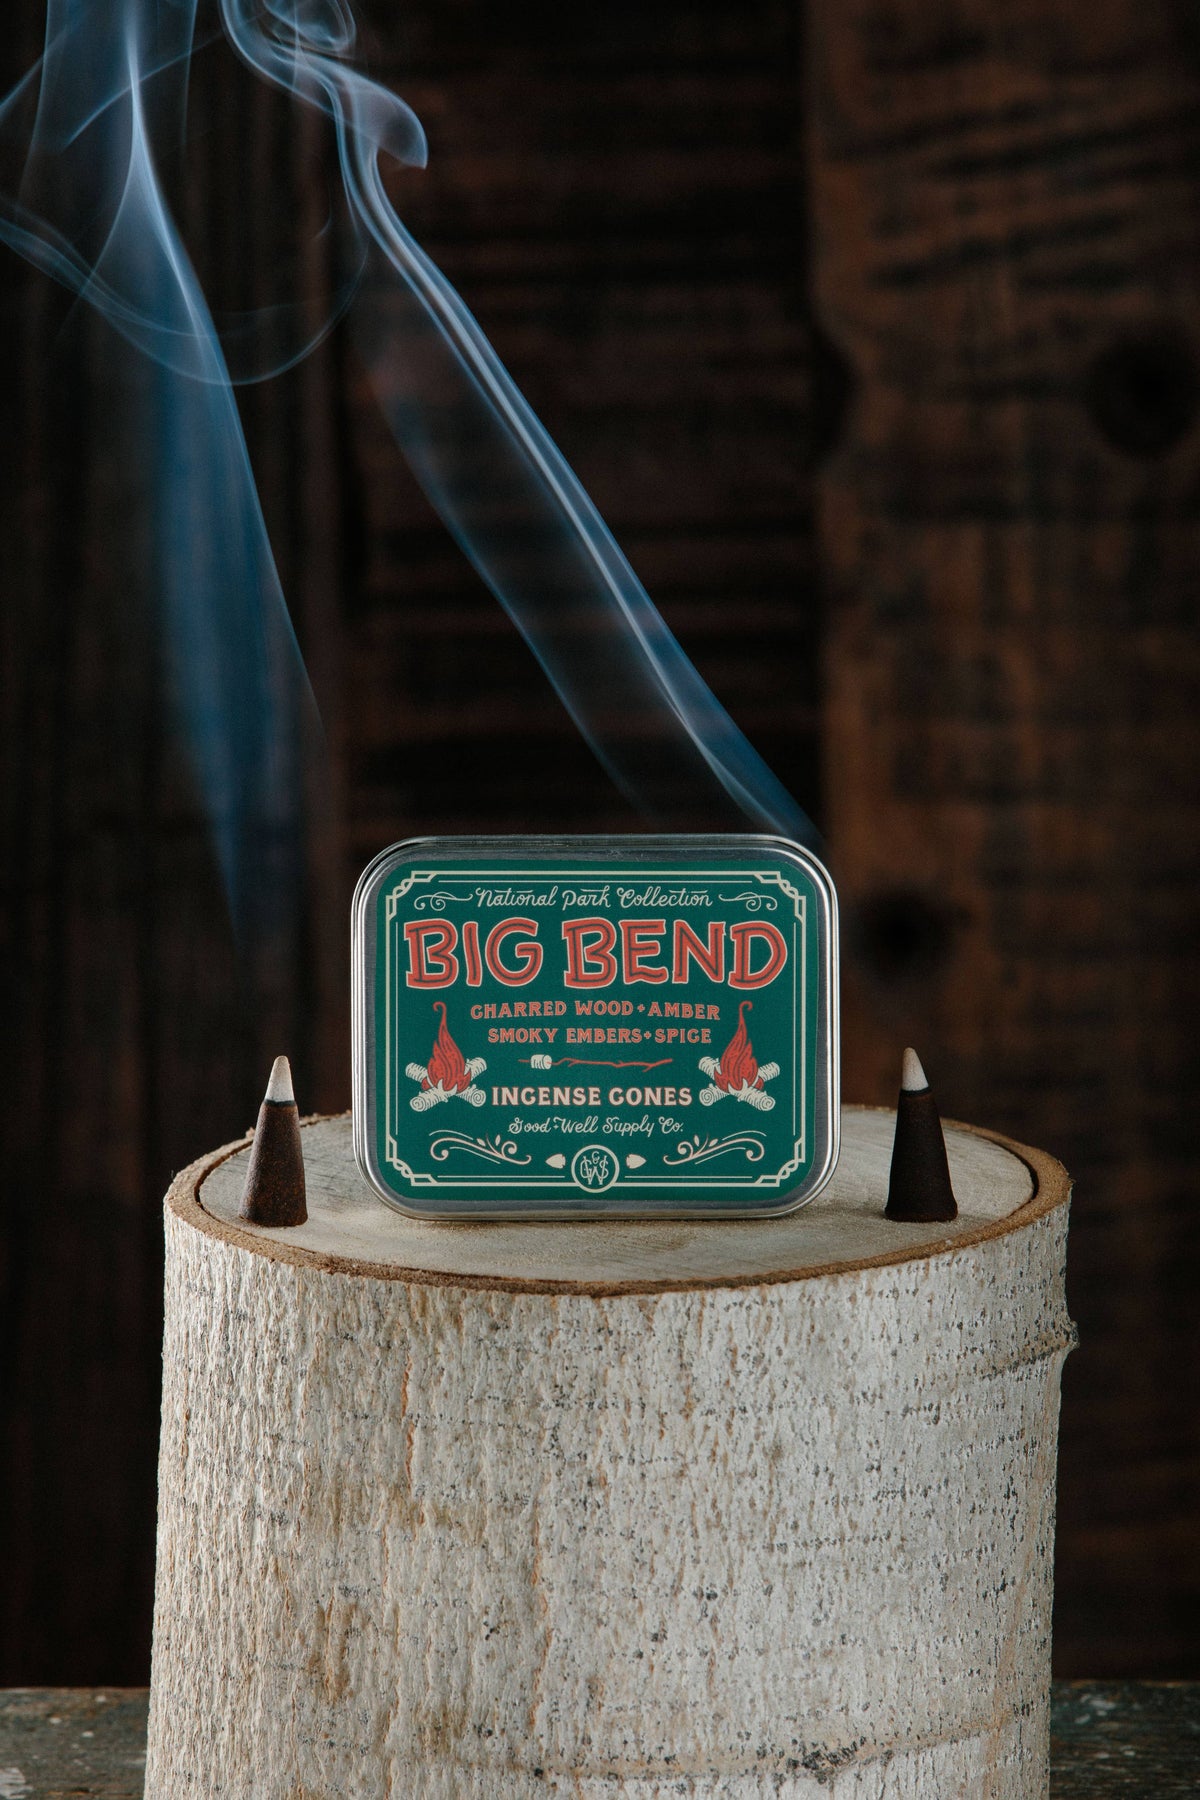 Big Bend Incense - Charred Wood Smoky Embers Amber + Spice